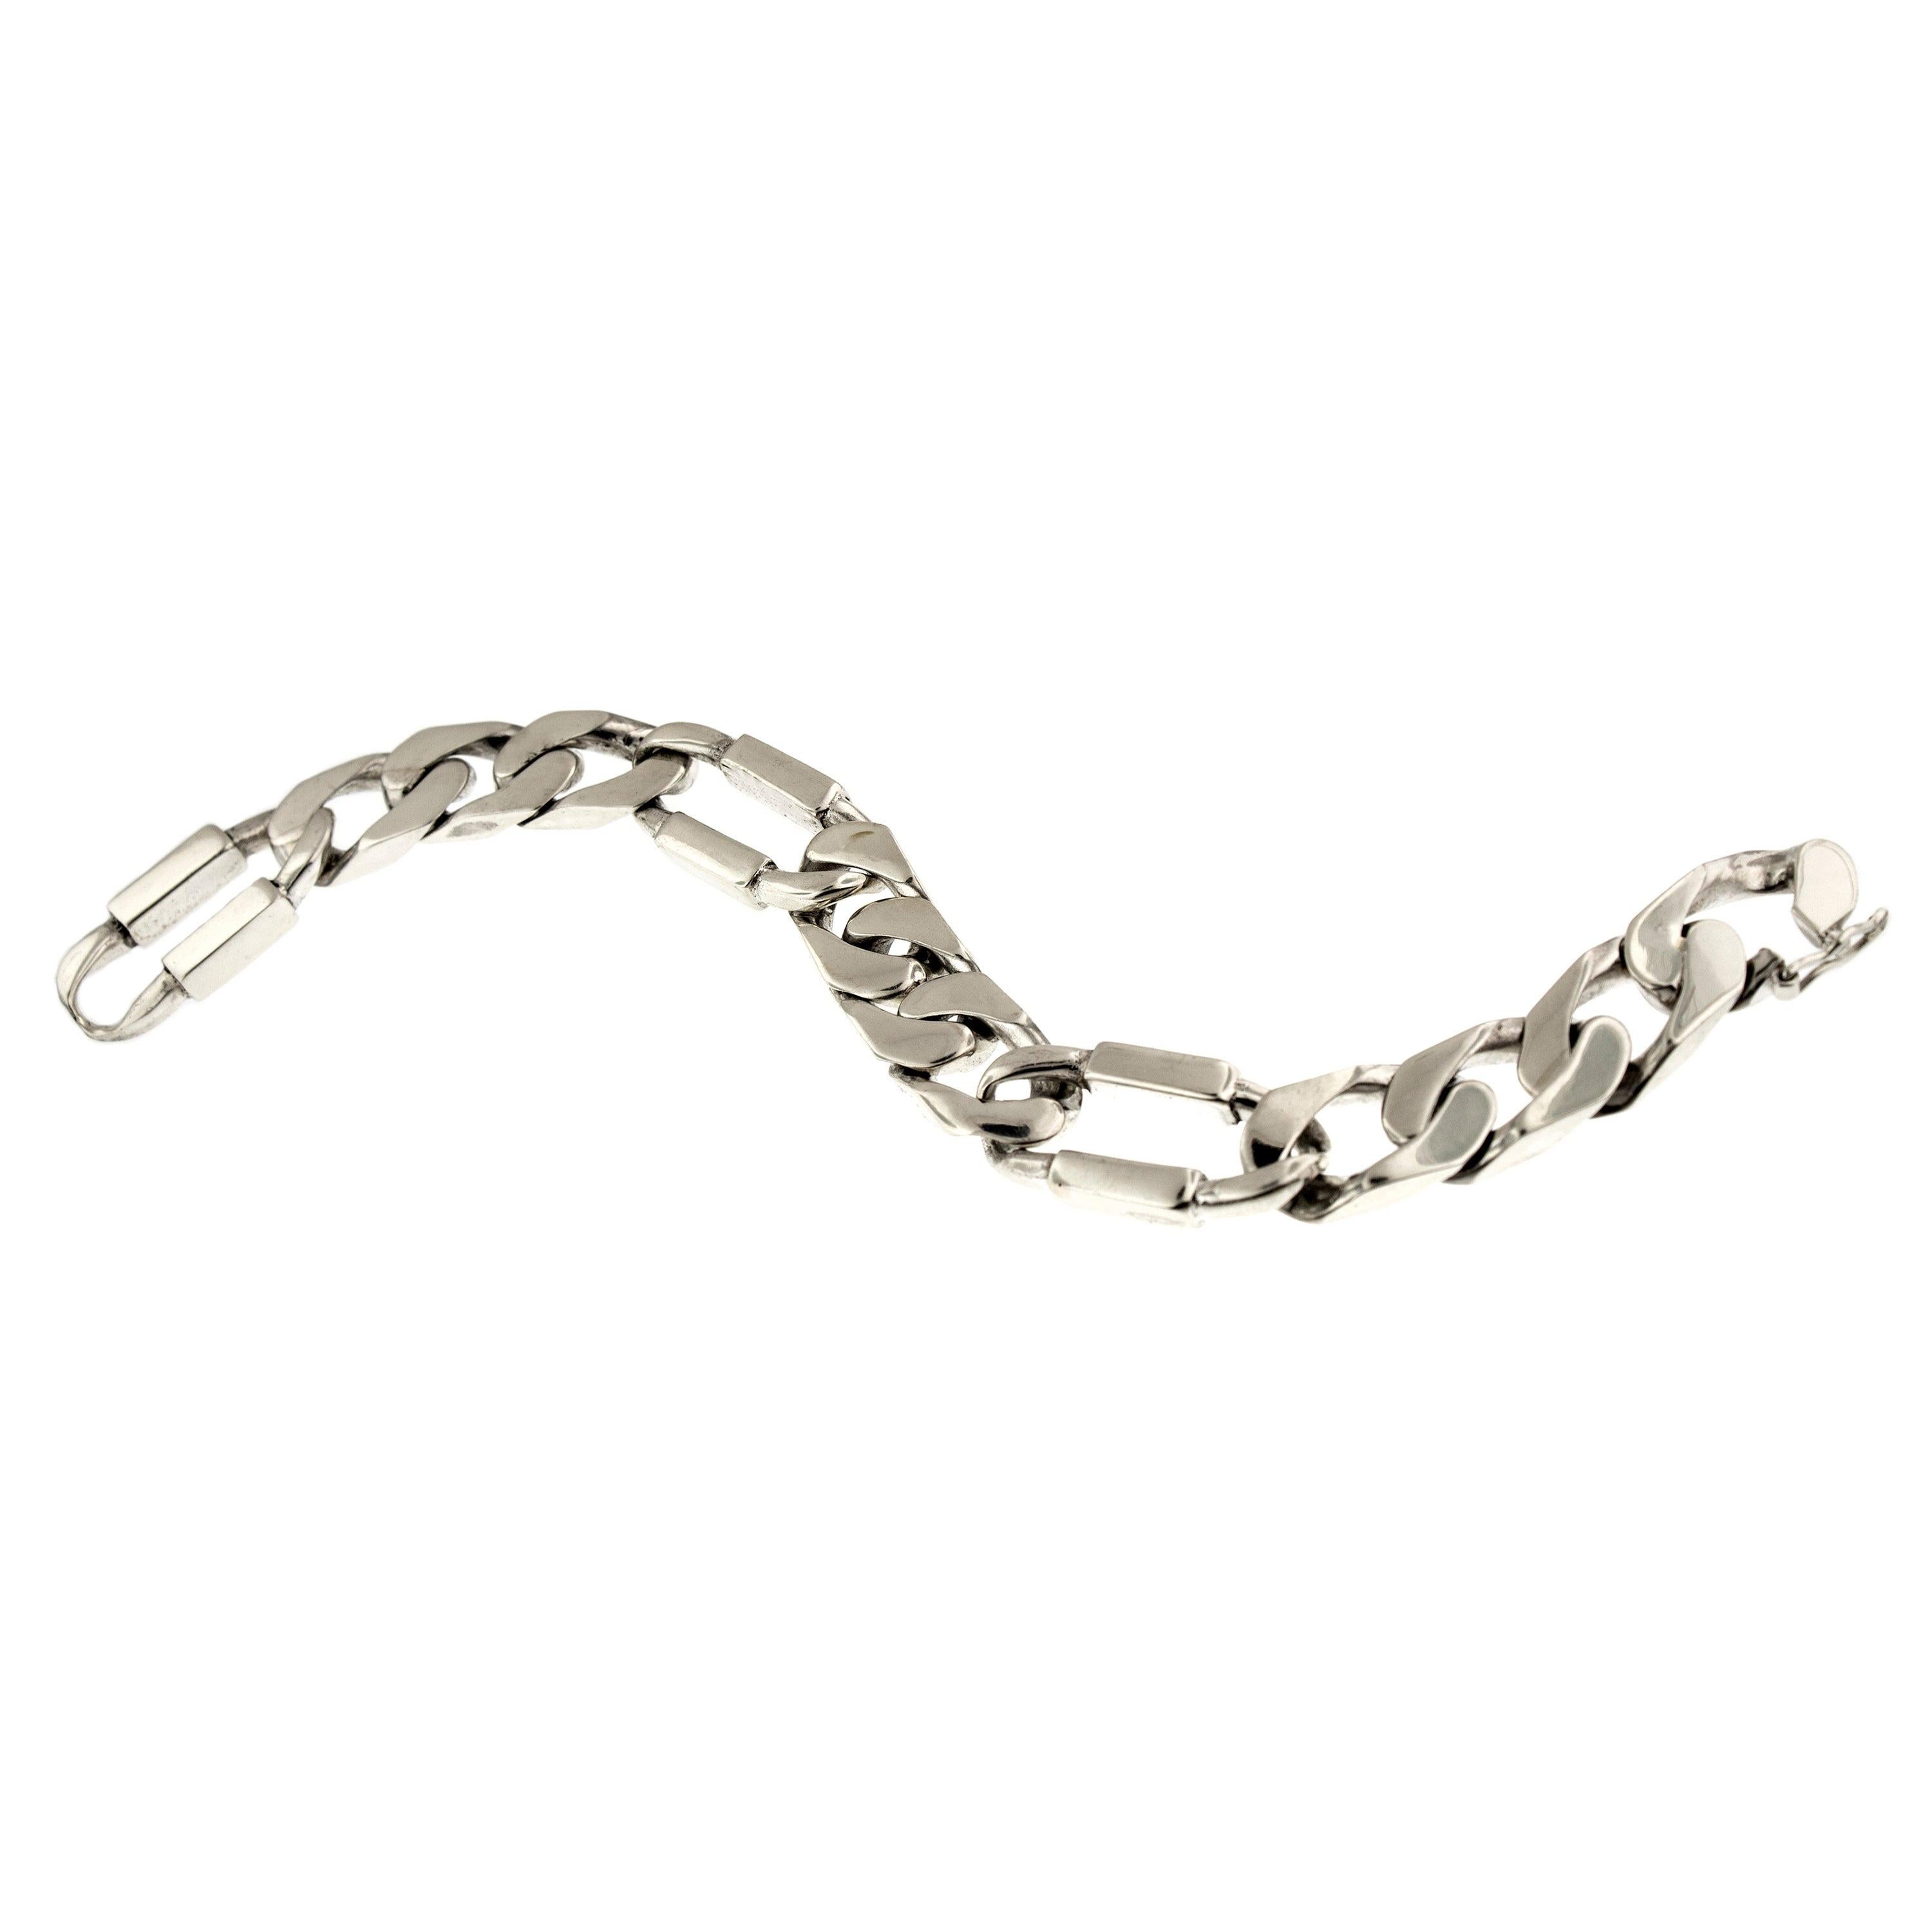 Tiffany Sterling Silver Men's Bracelet, Made in Italy